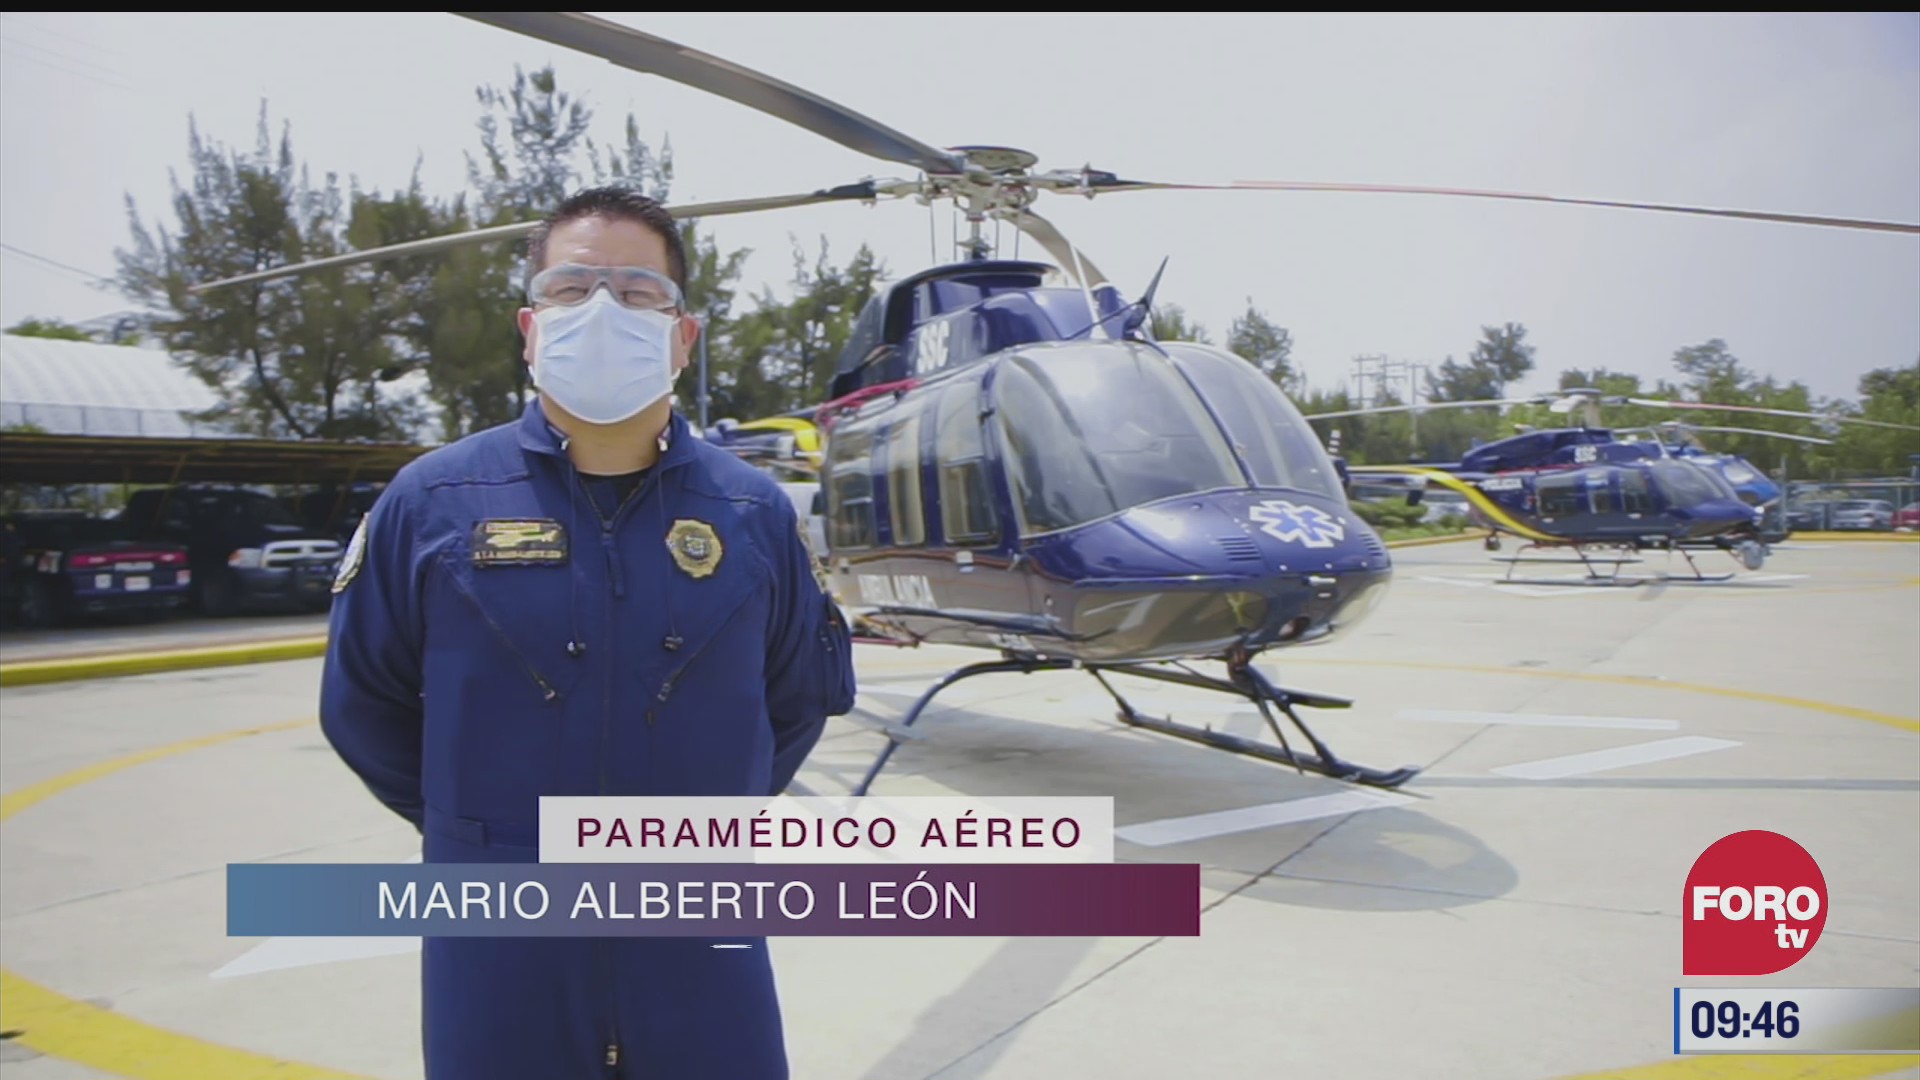 retratos de mexico paramedico aereo